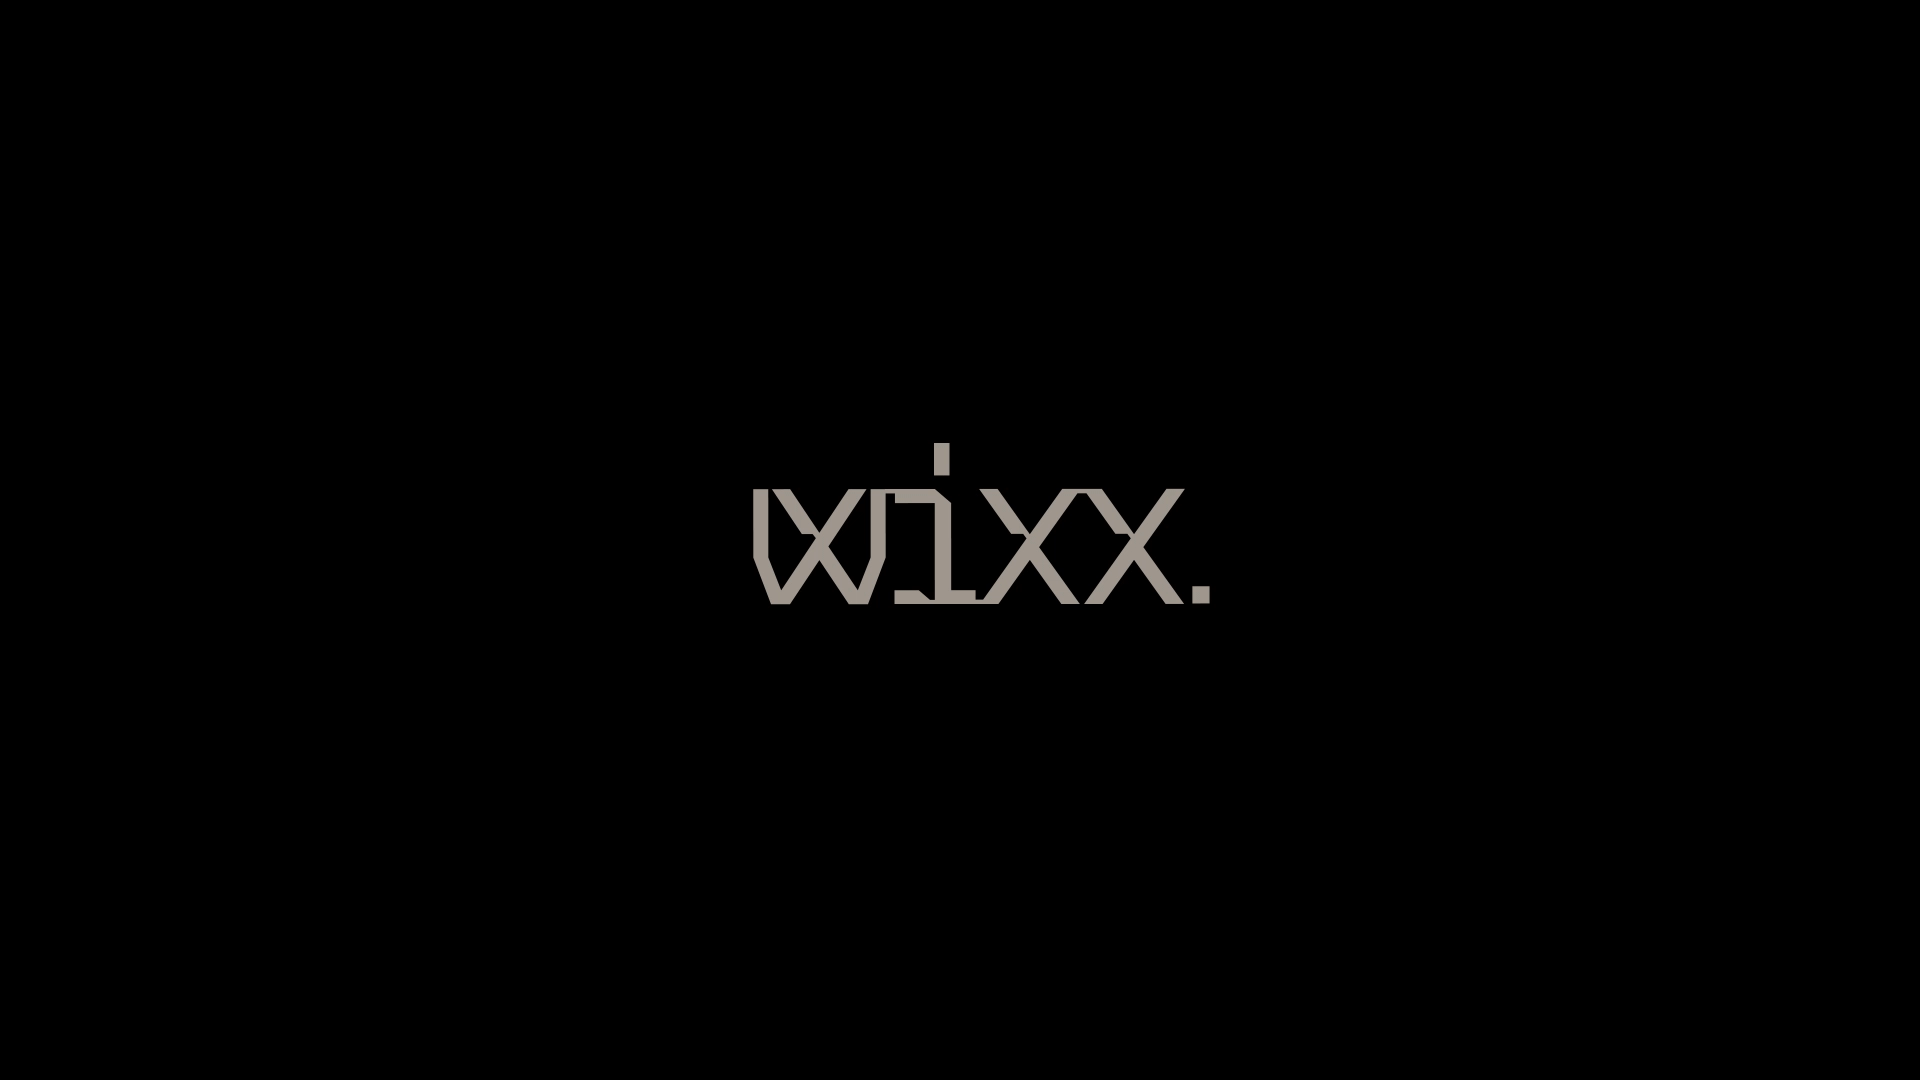 wixx_logo_animation.gif